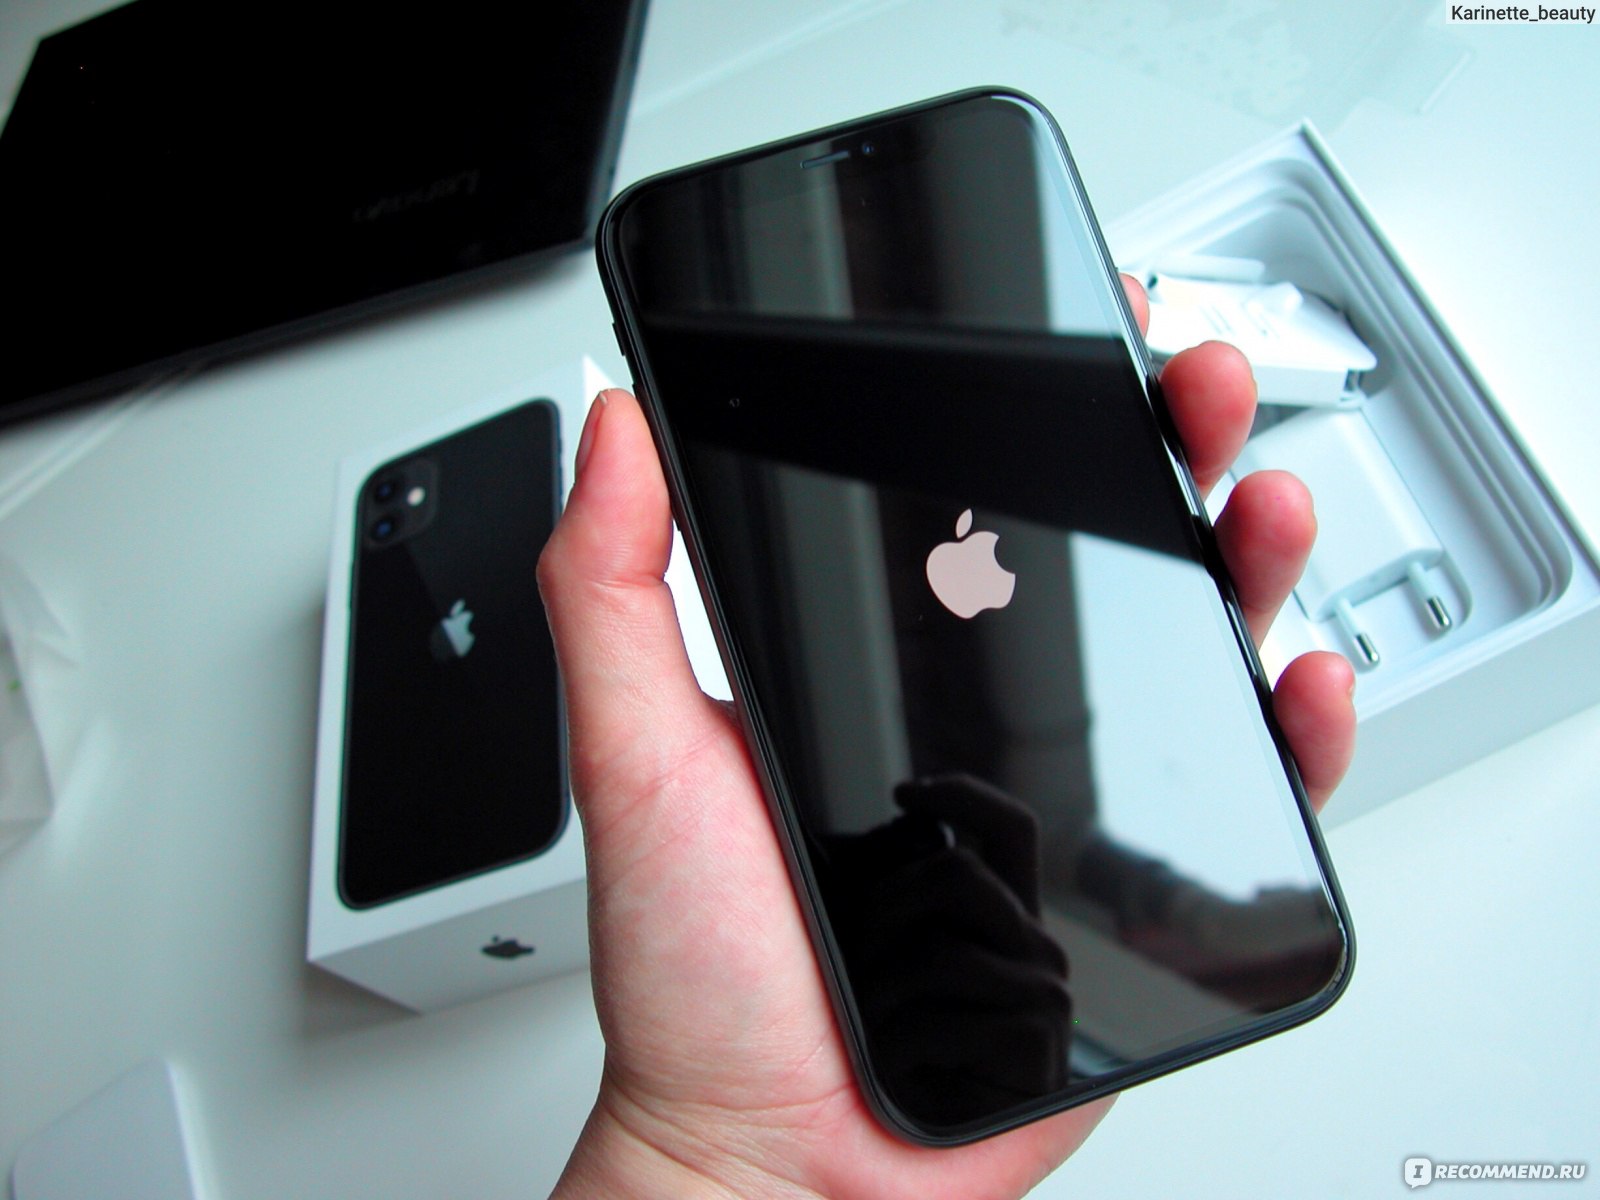 Iphone 11 Black vs White